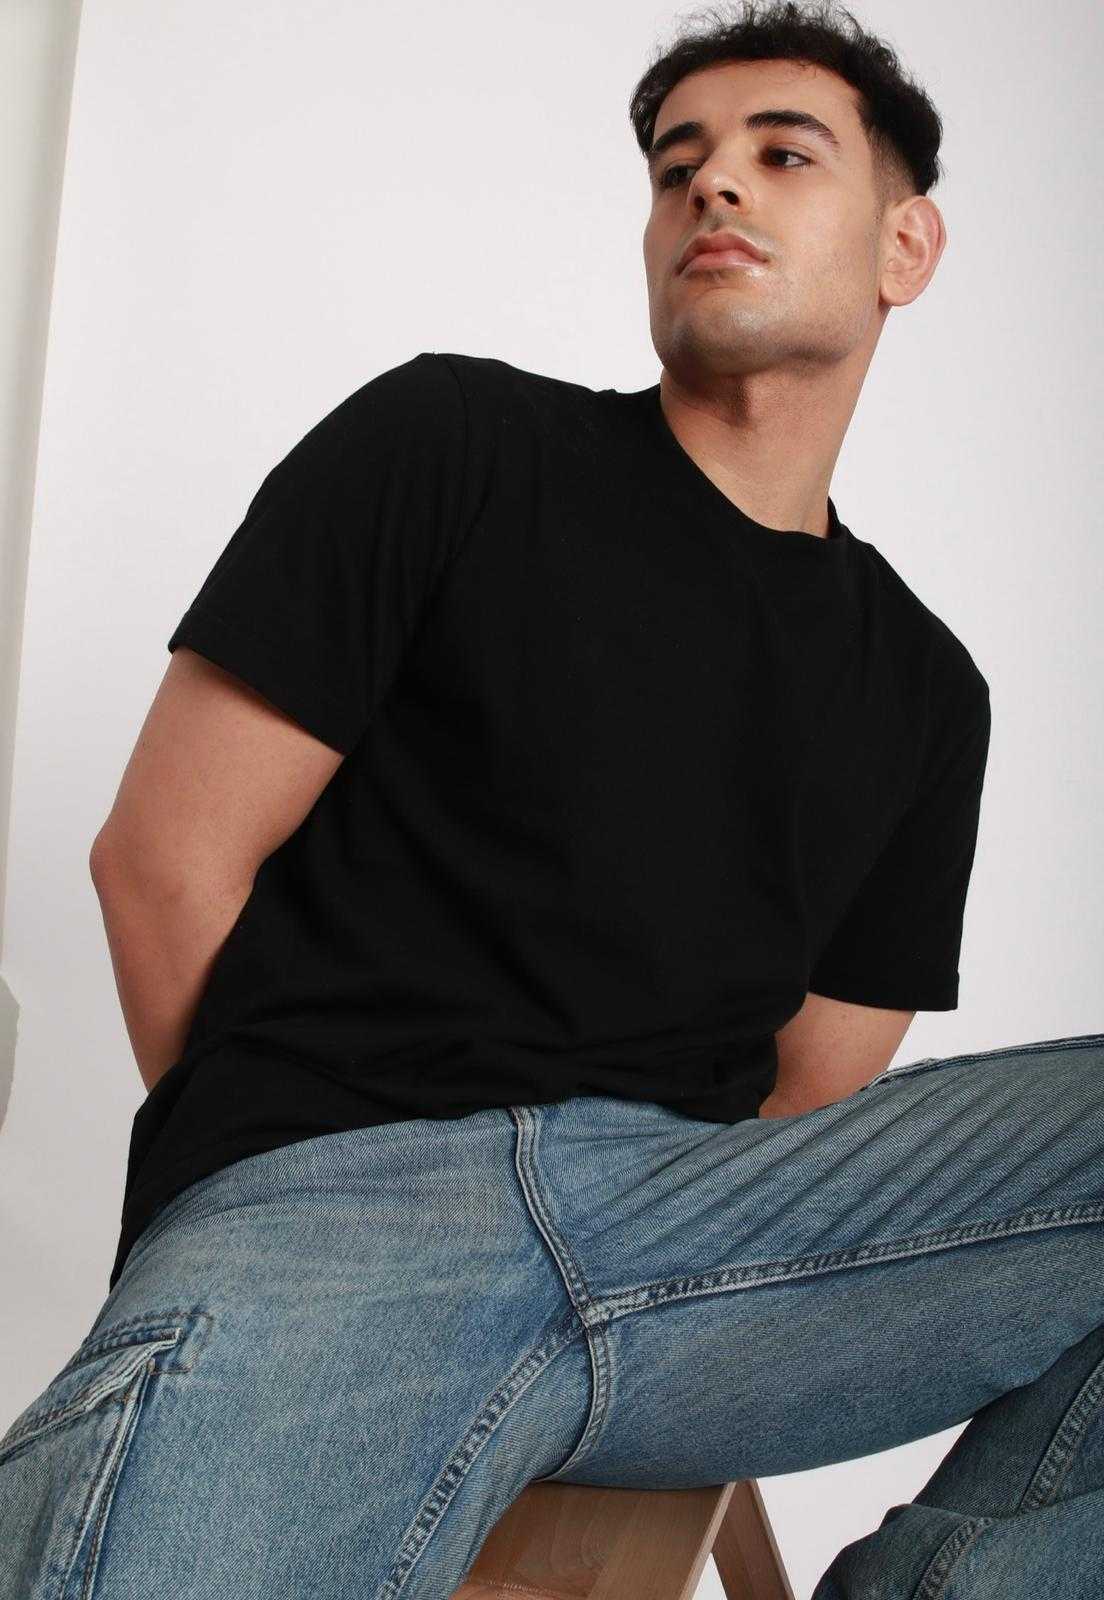 Profile Picture of Michael Pereira